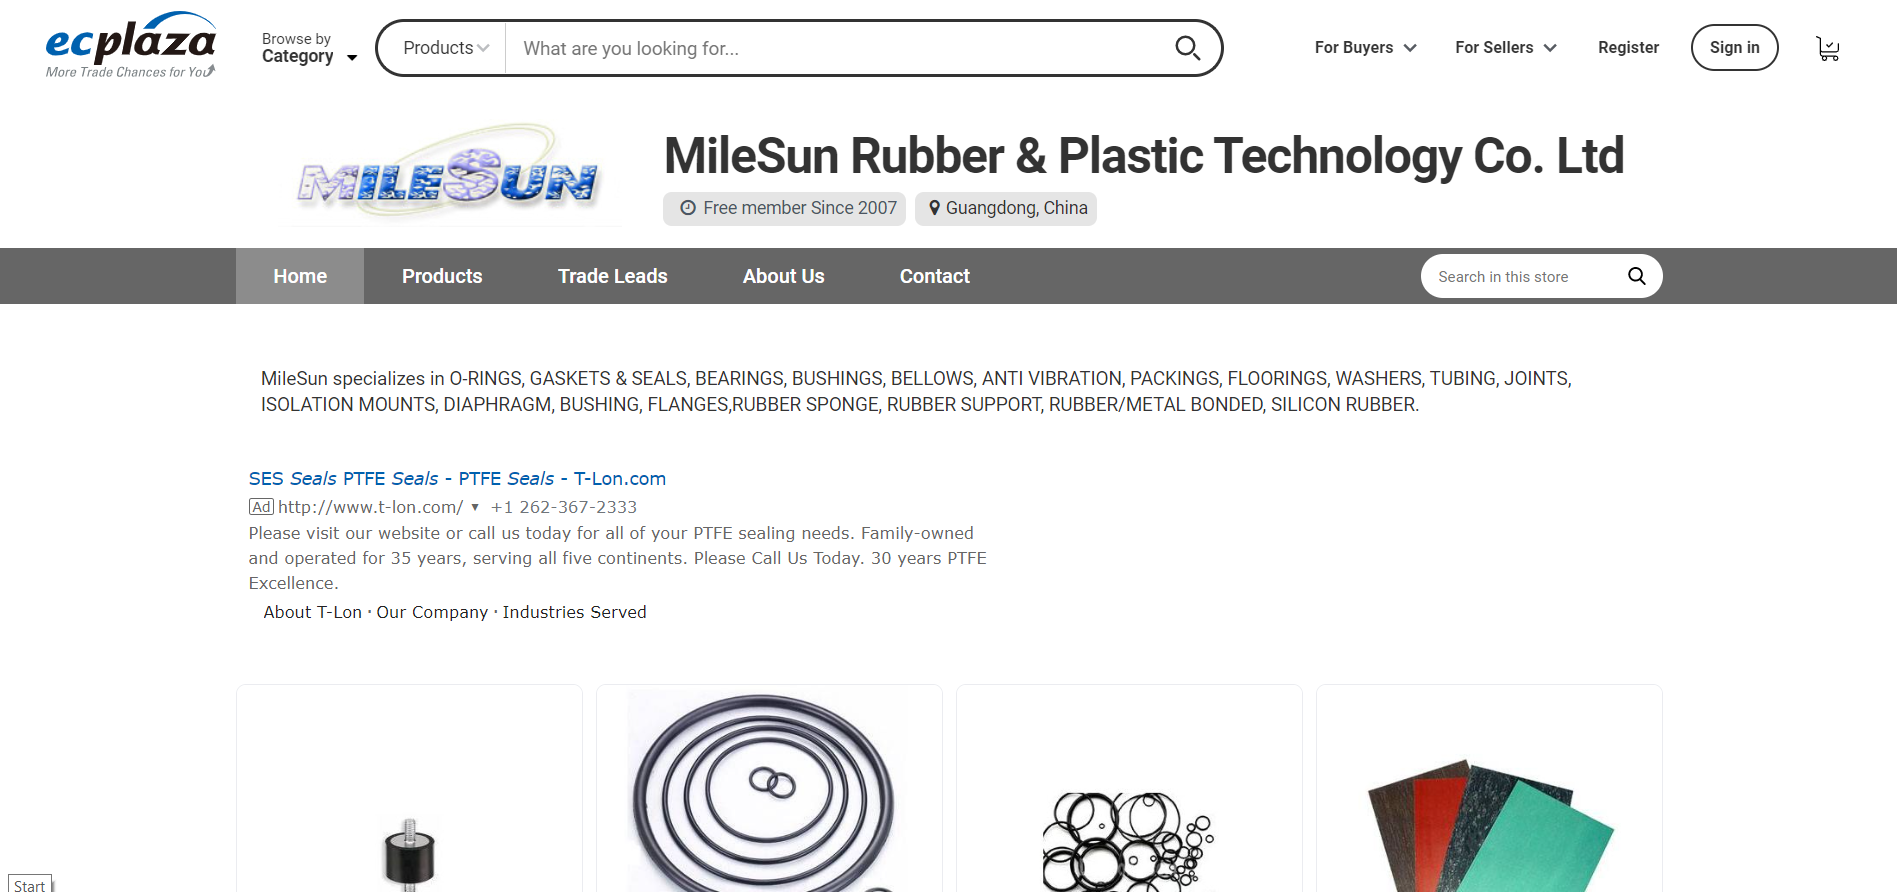 Milesun Rubber & Plastic Technology Co., Ltd